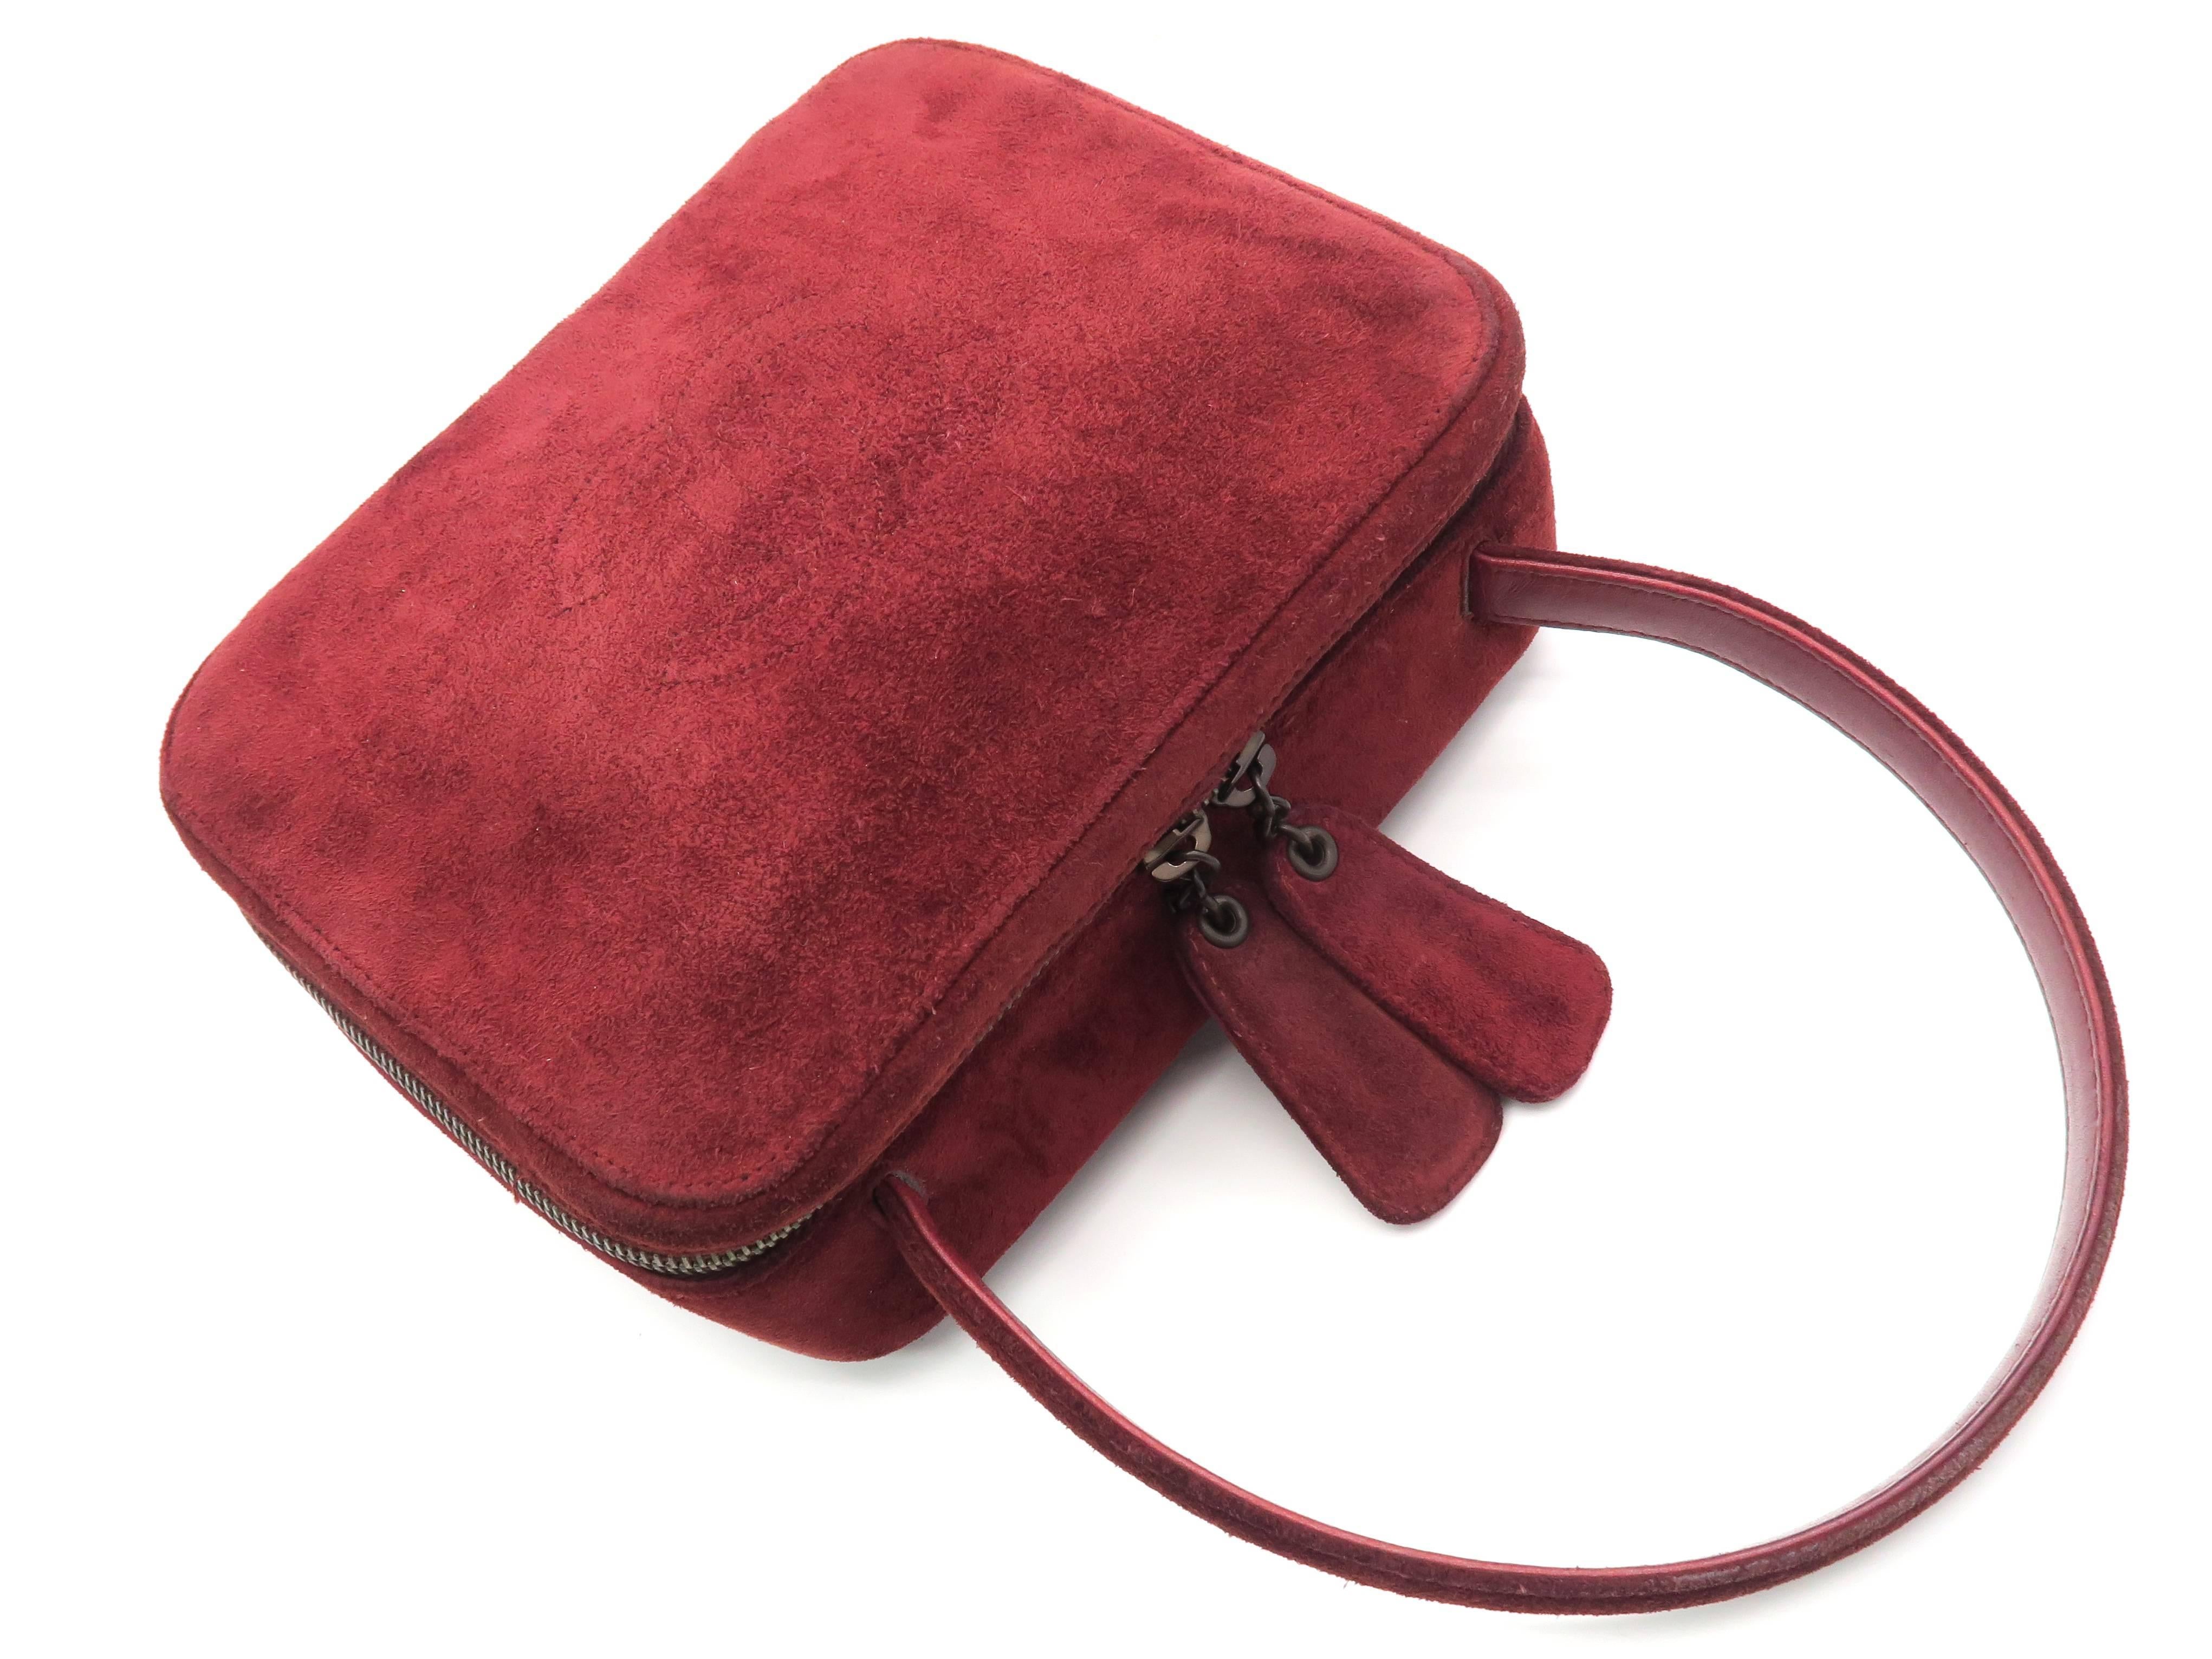 Chanel Red Suede Handbag For Sale 2